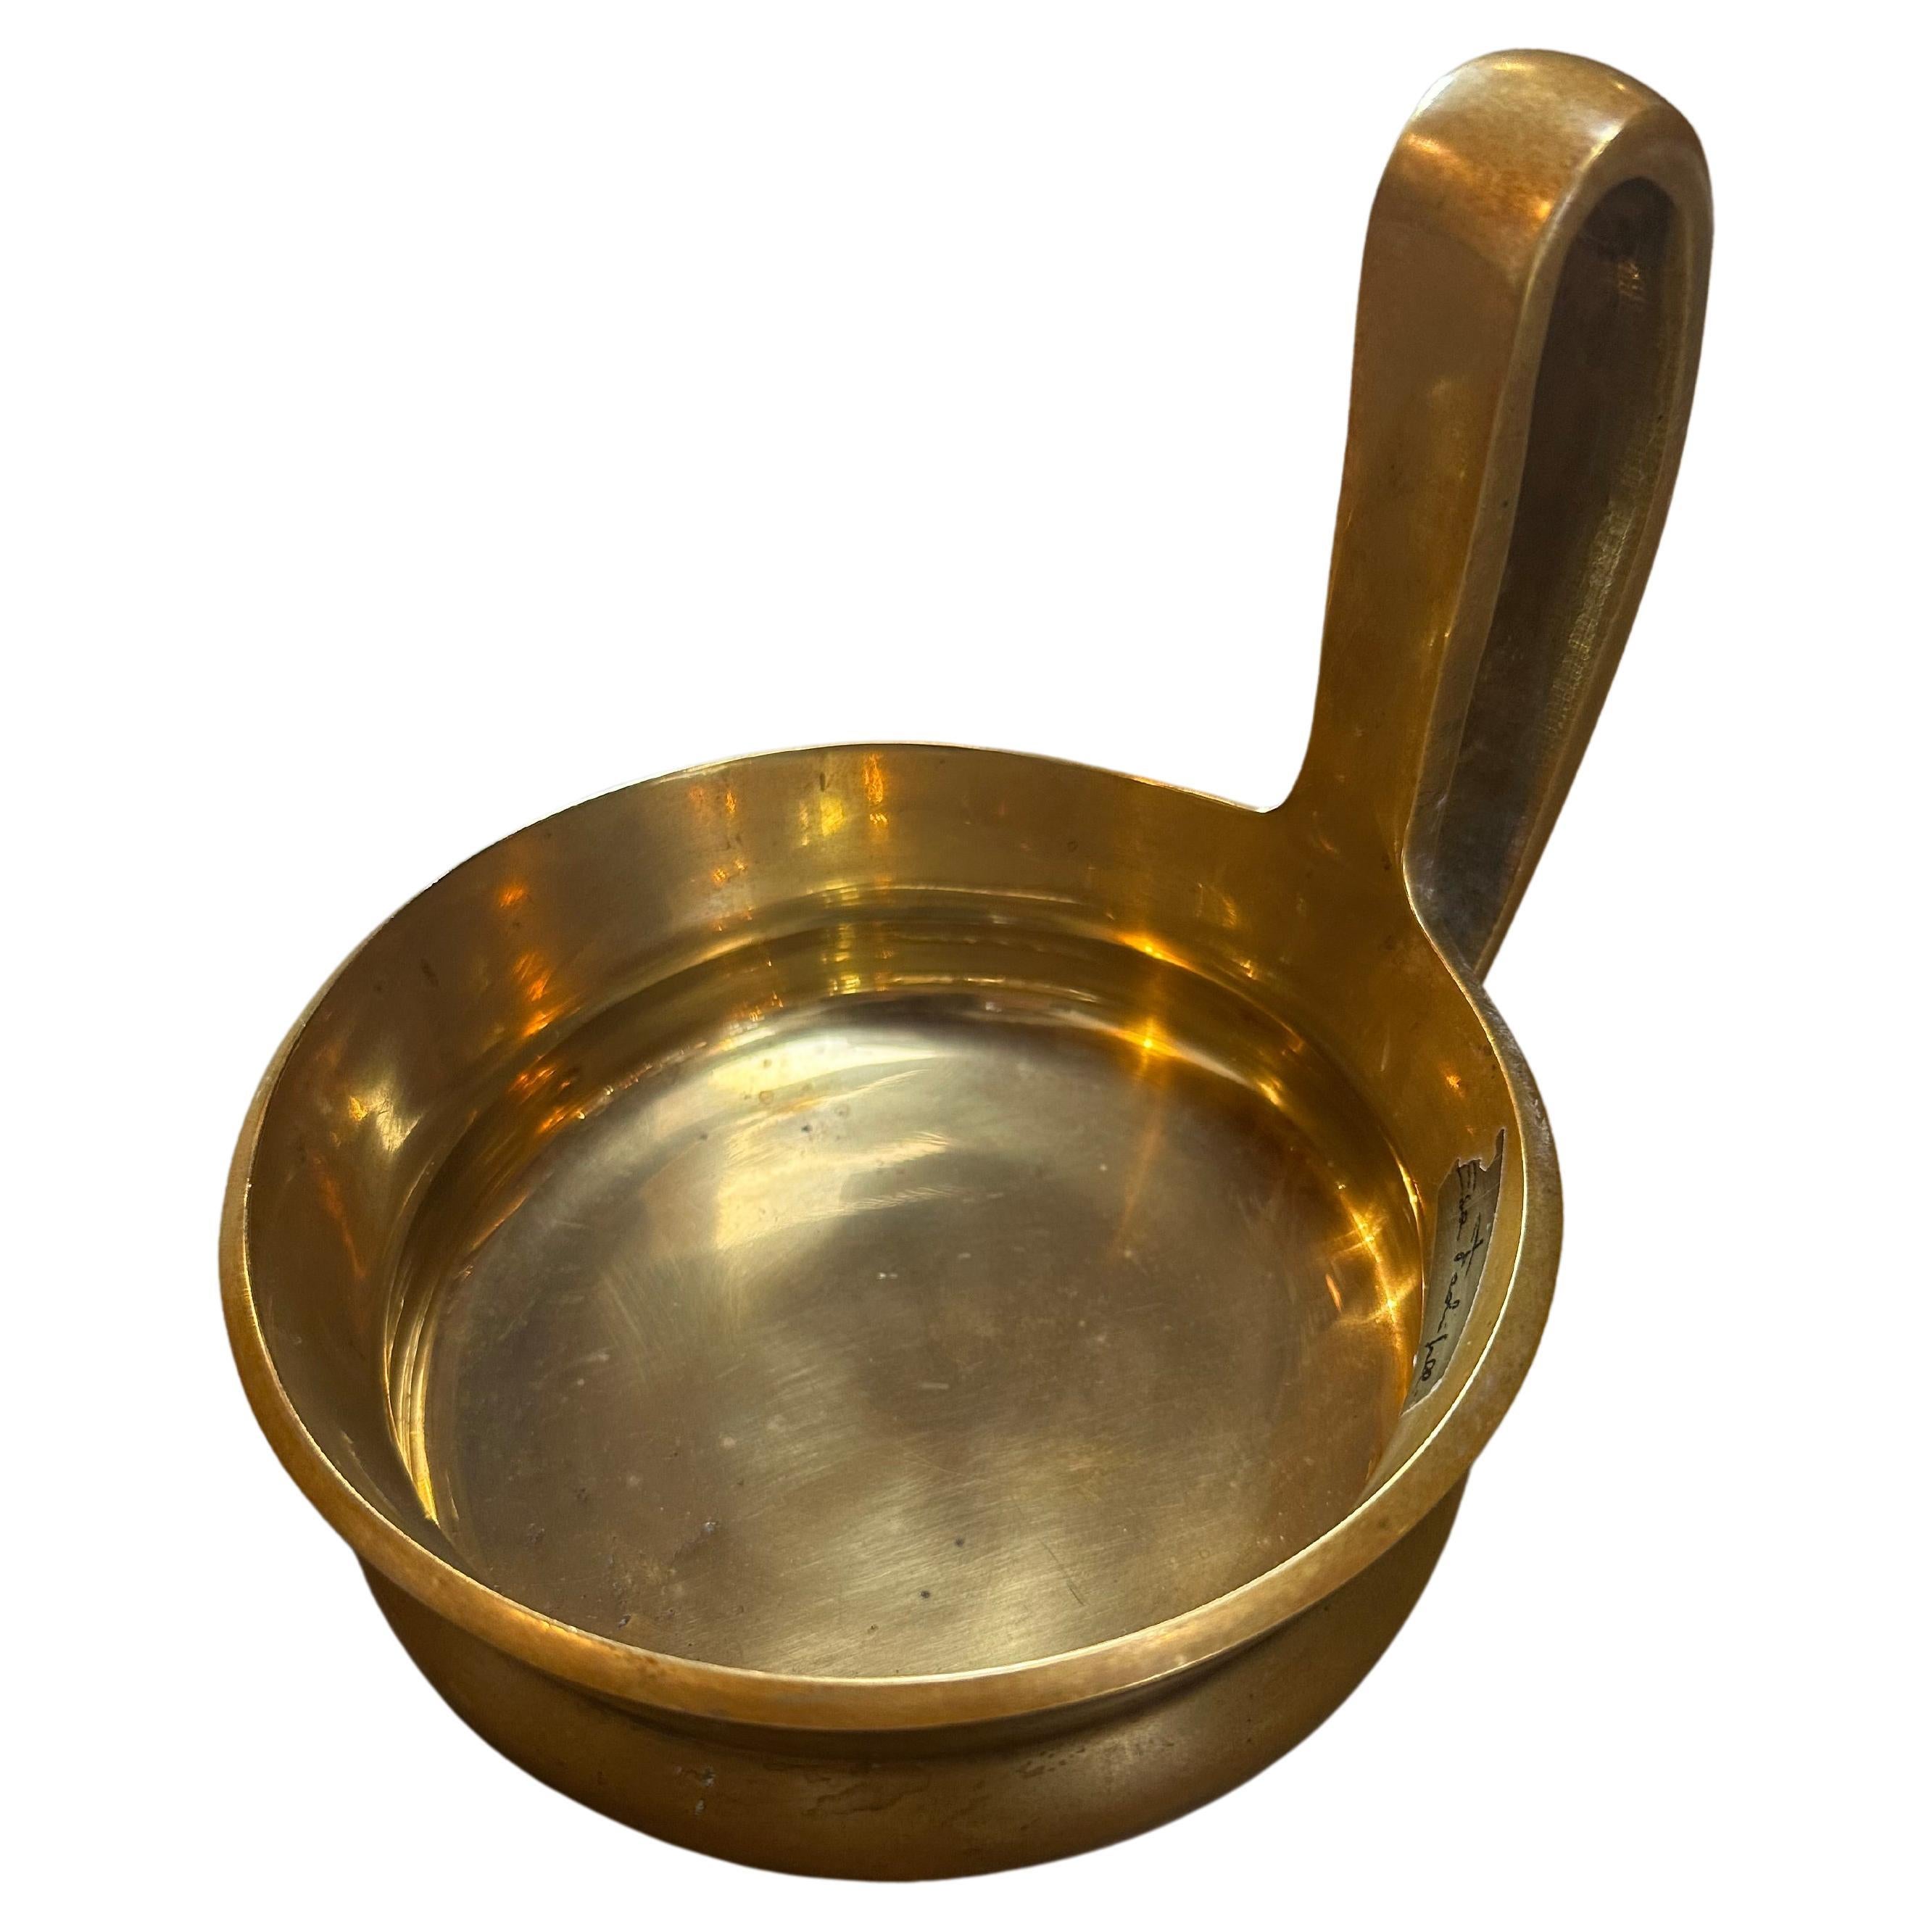 Vintage Italian Brass Decorative bowl 1980